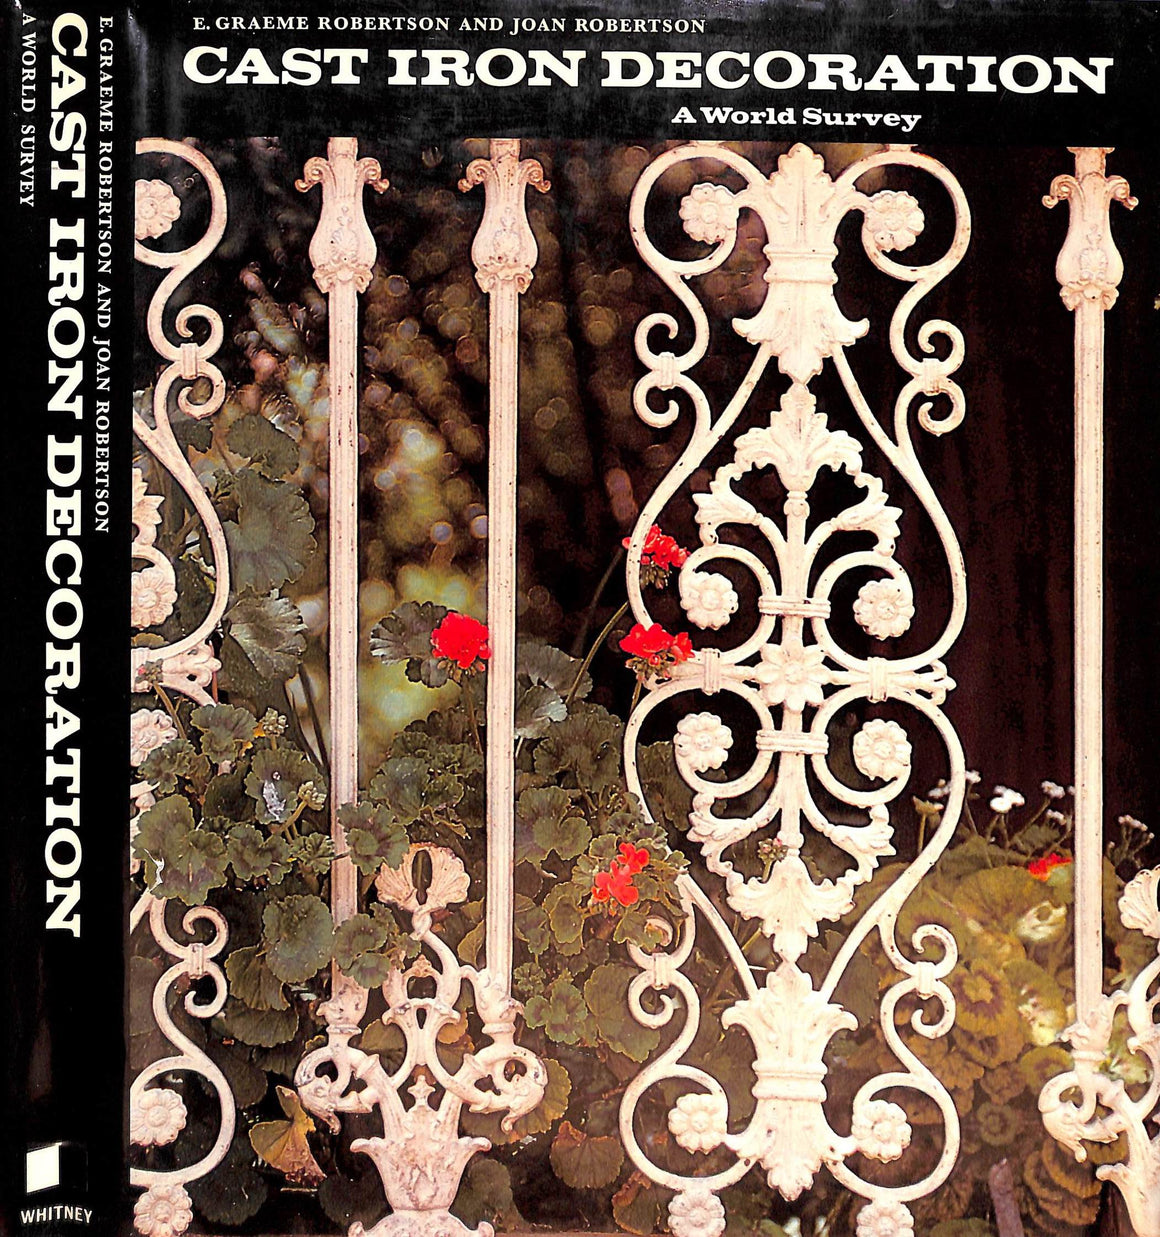 "Cast Iron Decoration: A World Survey" 1977 ROBERTSON, E. Graeme and Joan